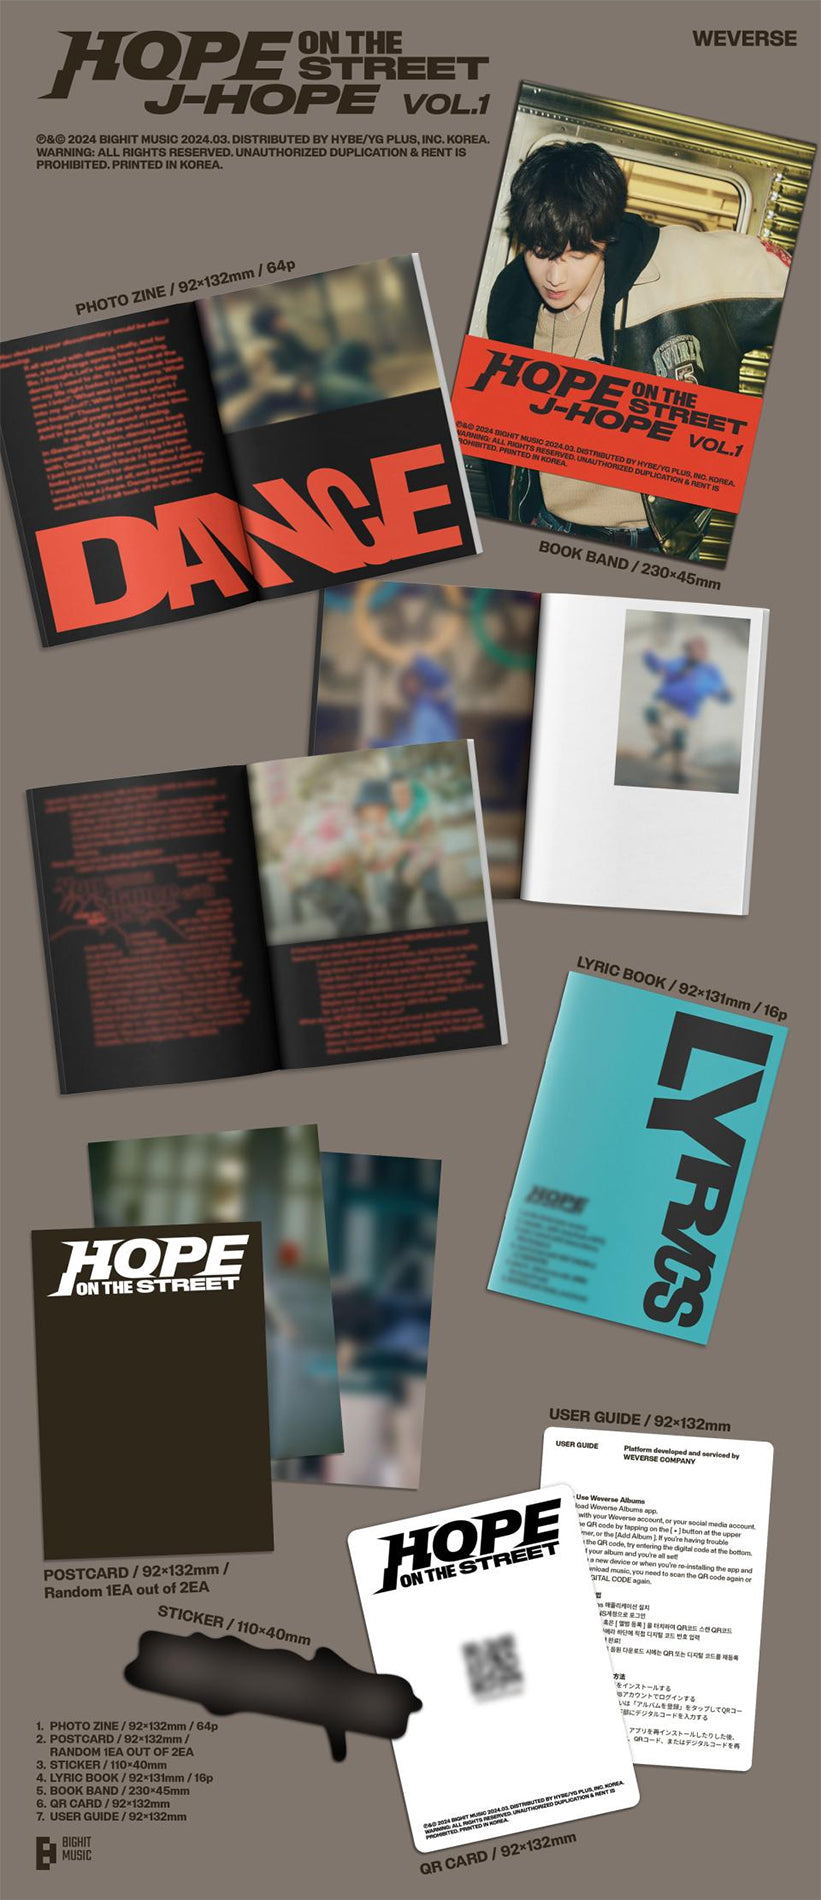 j-hope - Special Album 'HOPE ON THE STREET VOL.1' Weverse Album